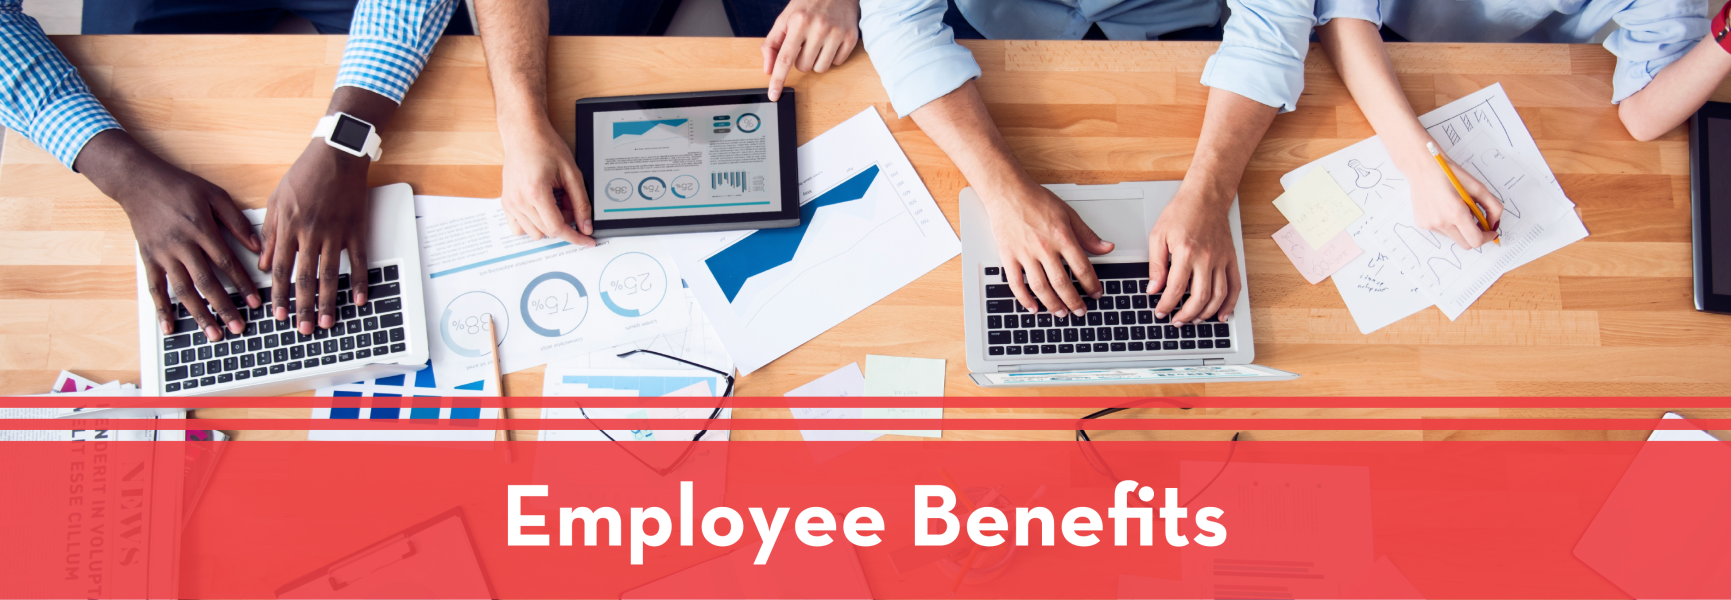 Employee Benefits Banner